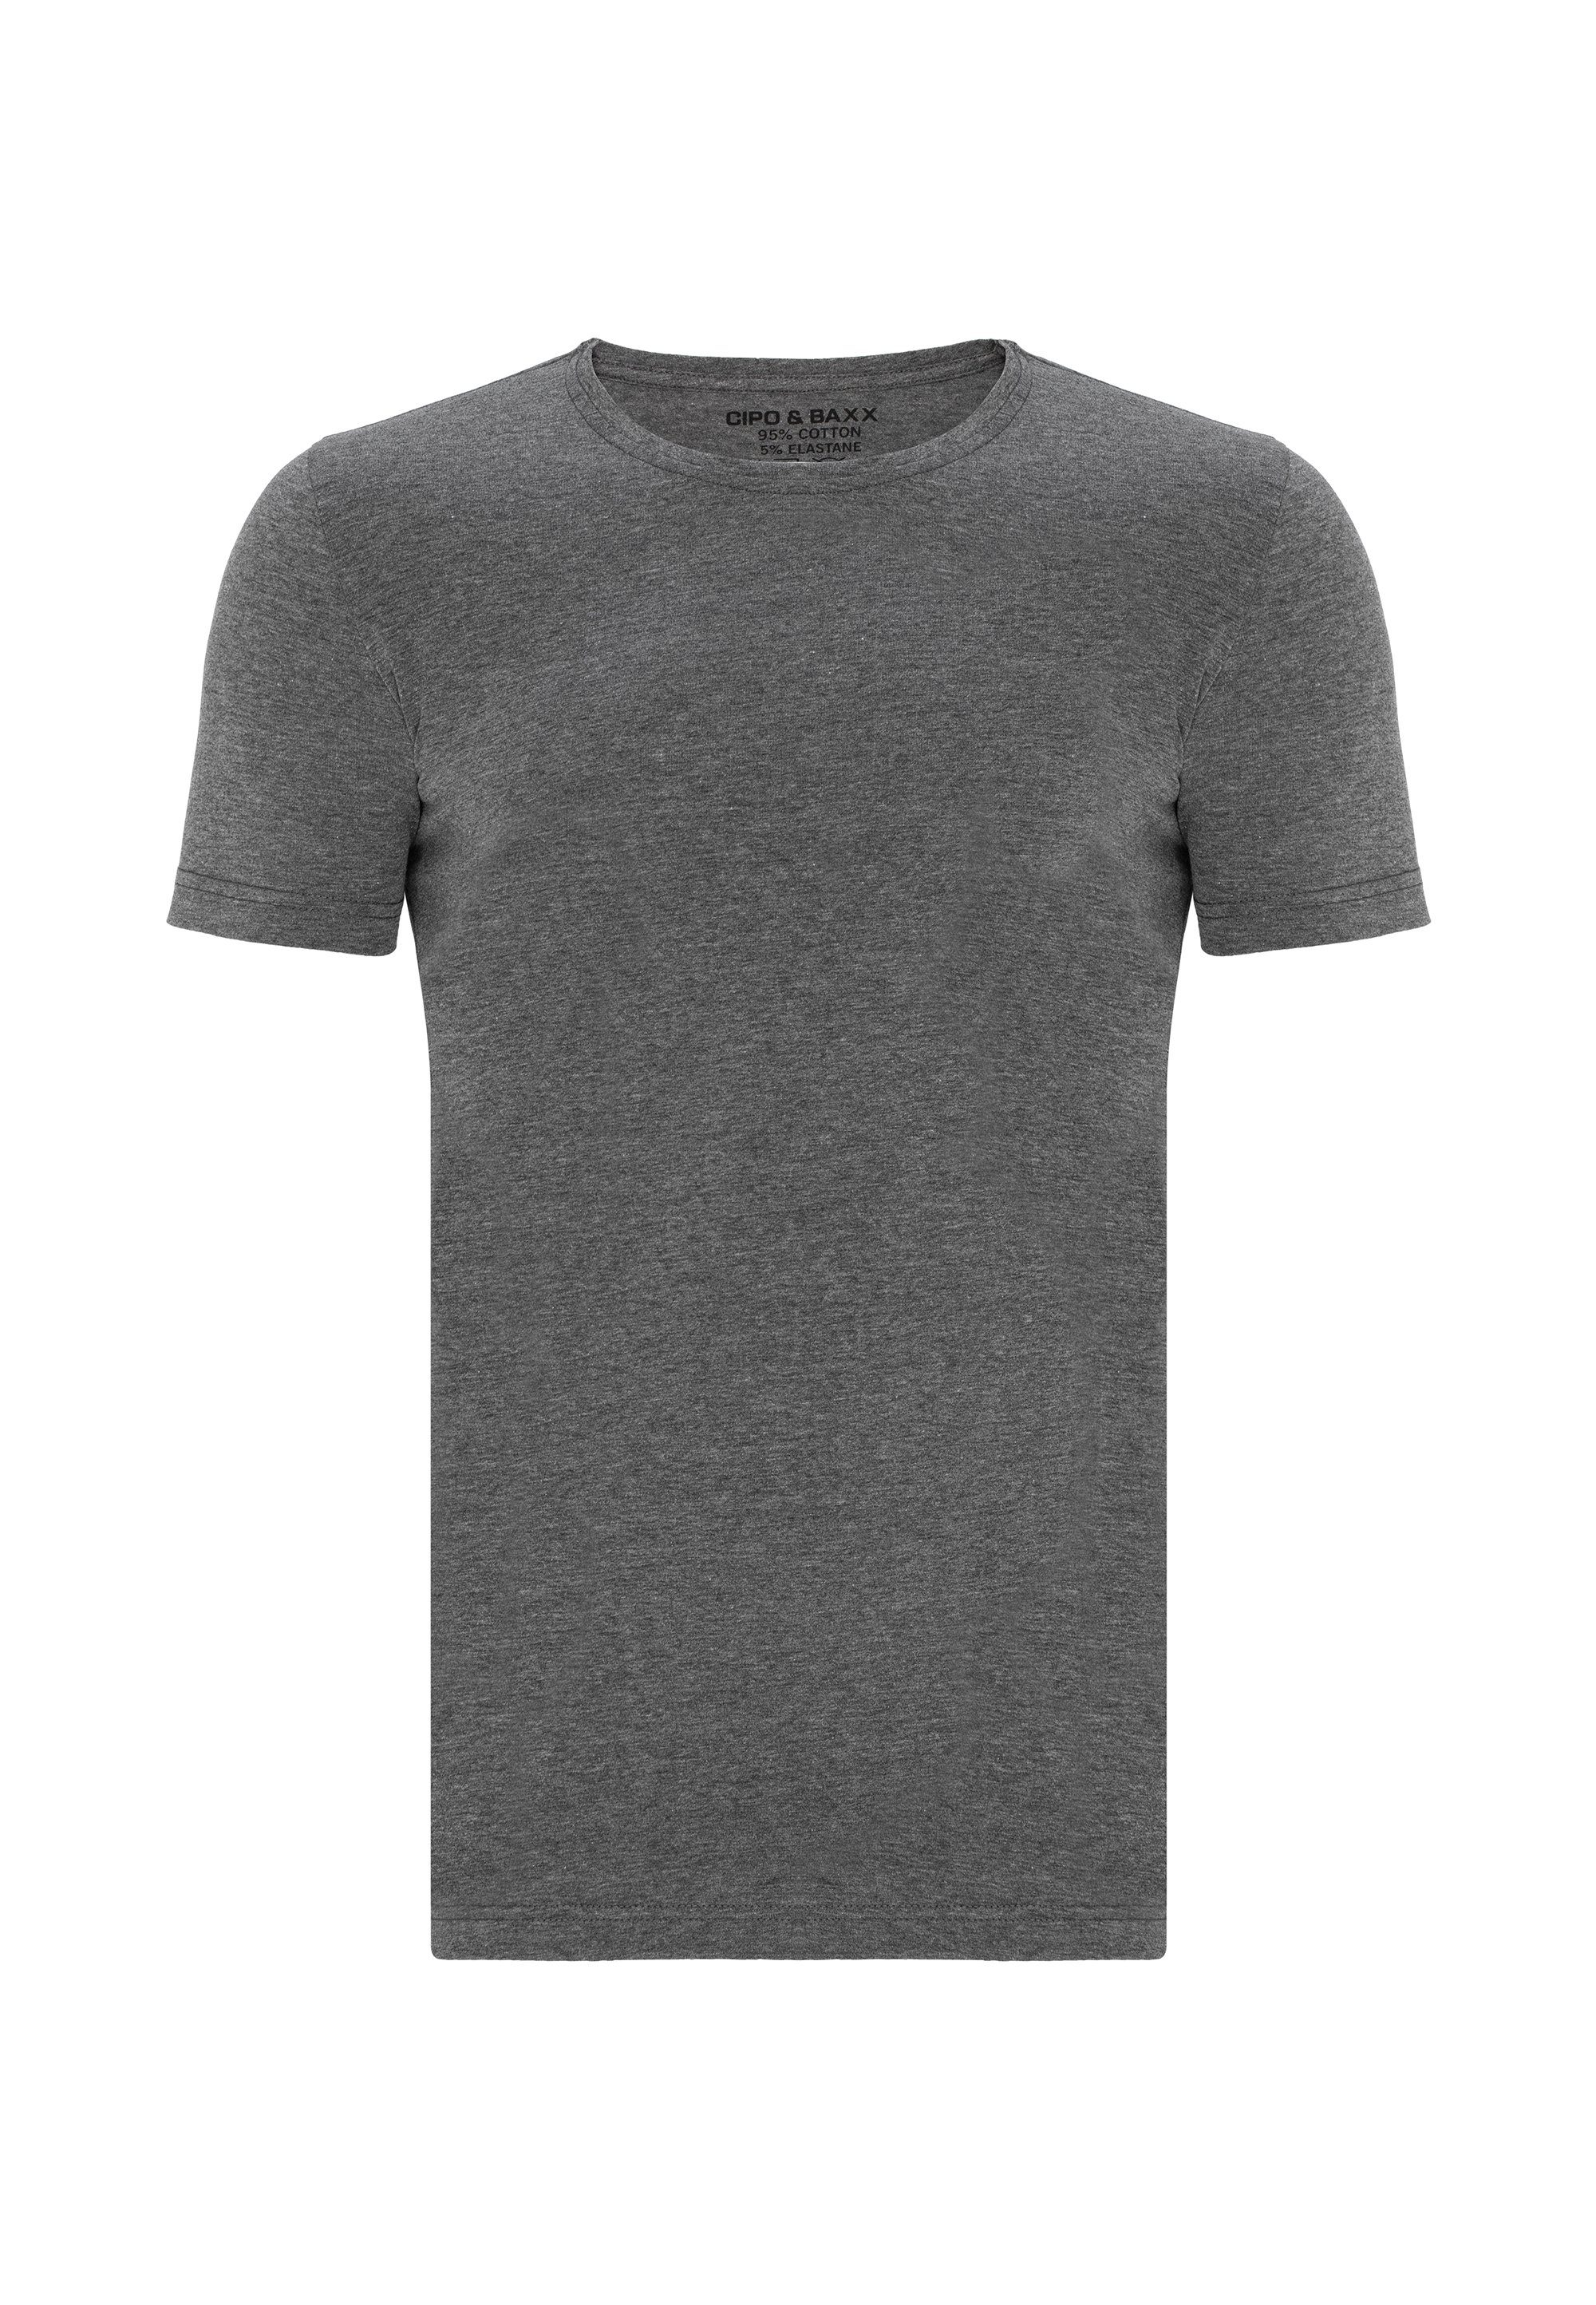 Cipo & Baxx T-Shirt mit modernem Rundhalsausschnitt anthrazit